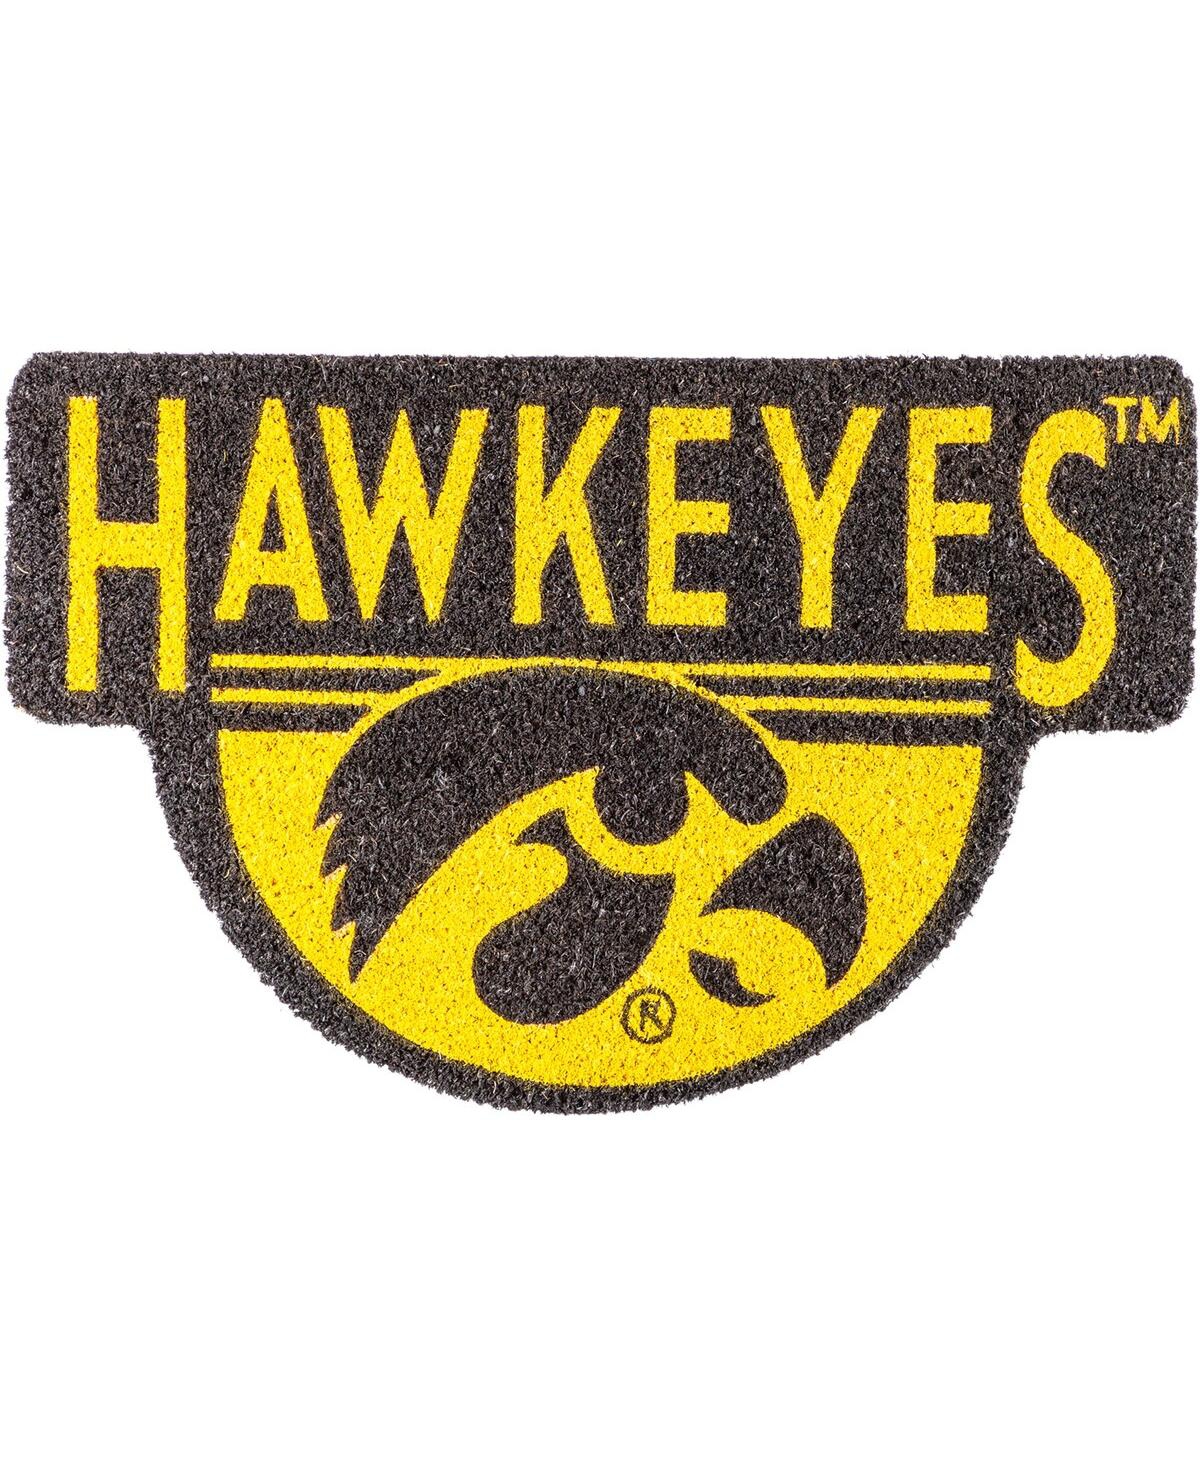 Evergreen Enterprises Iowa Hawkeyes Shaped Coir Doormat In Black,yellow